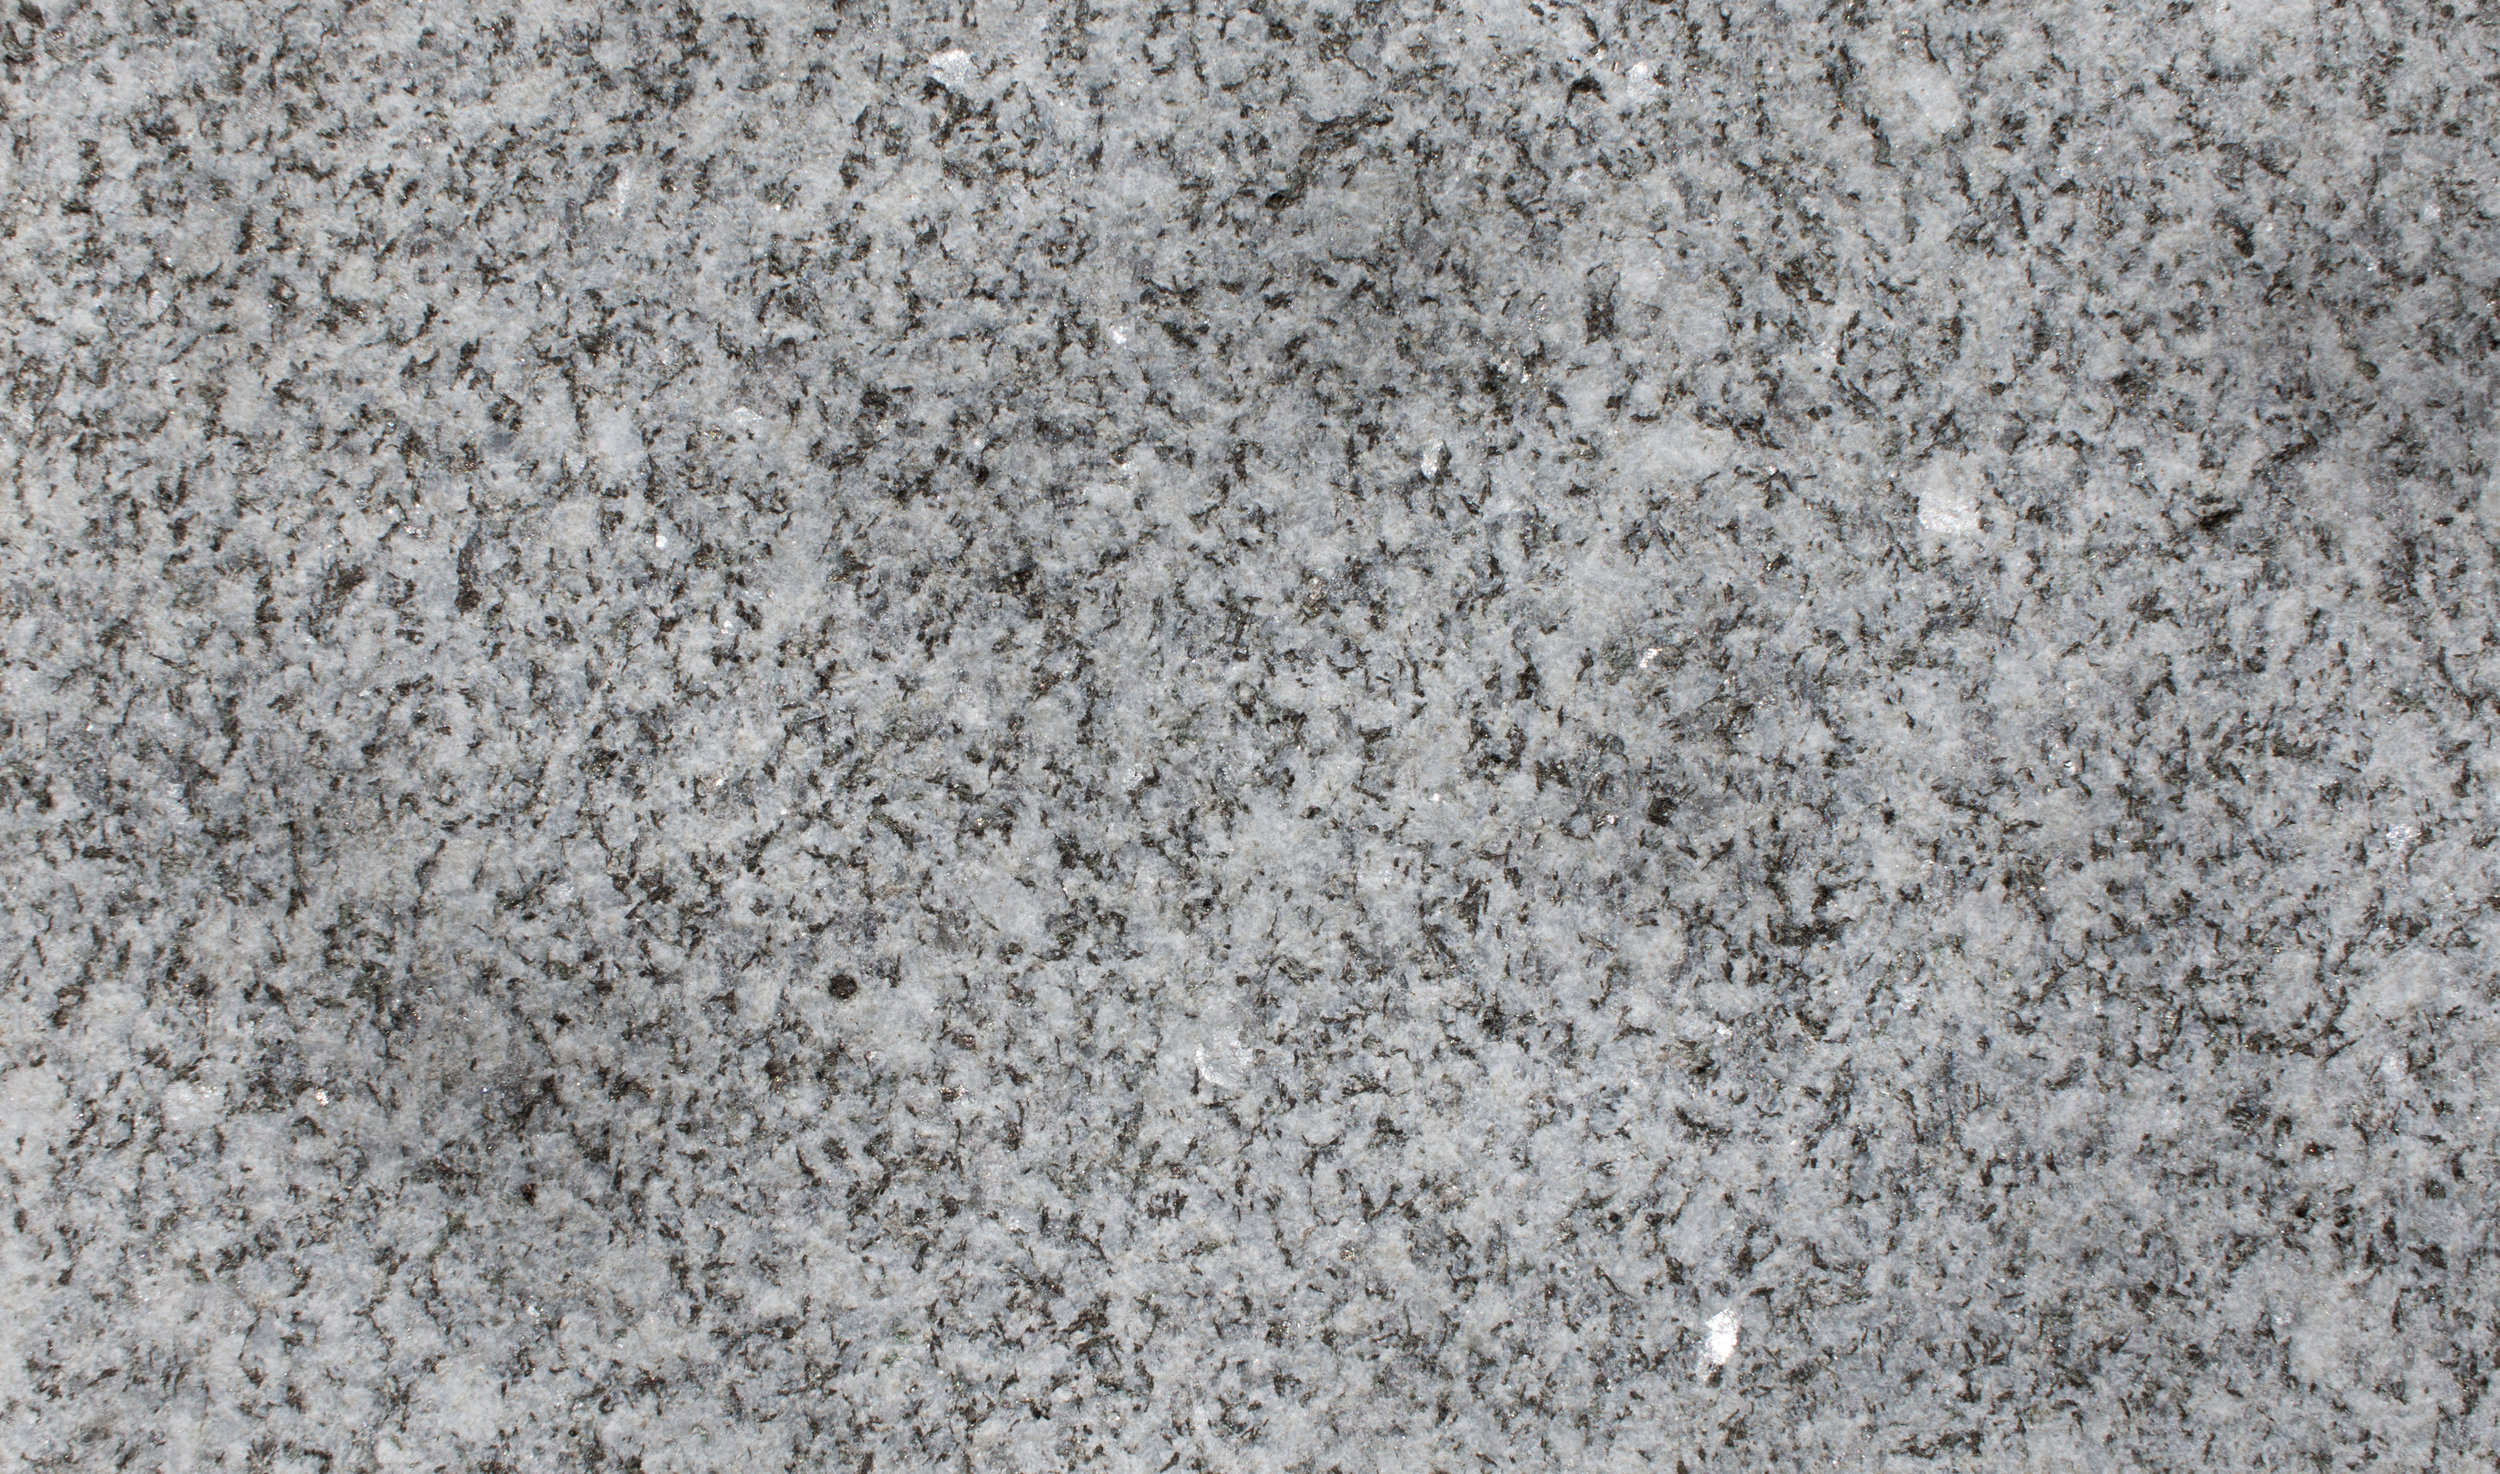 Steeled Barre Granite